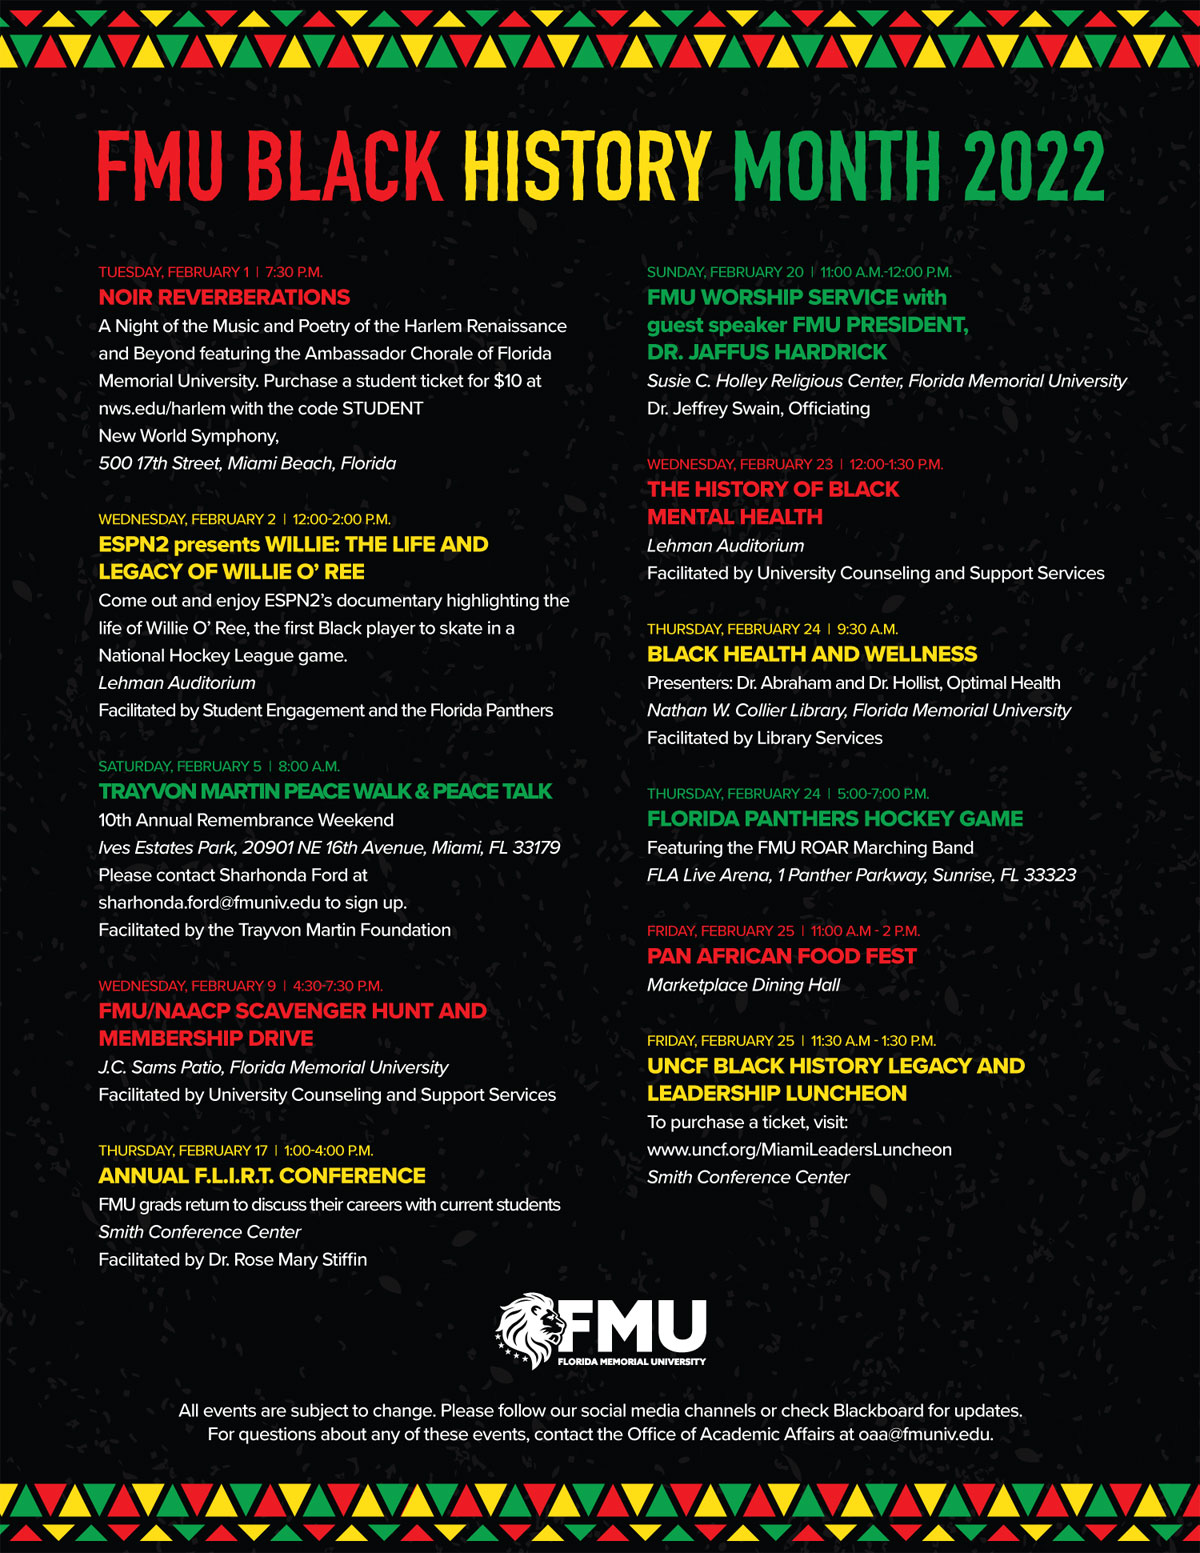 2022 FMU Black History Month calendar